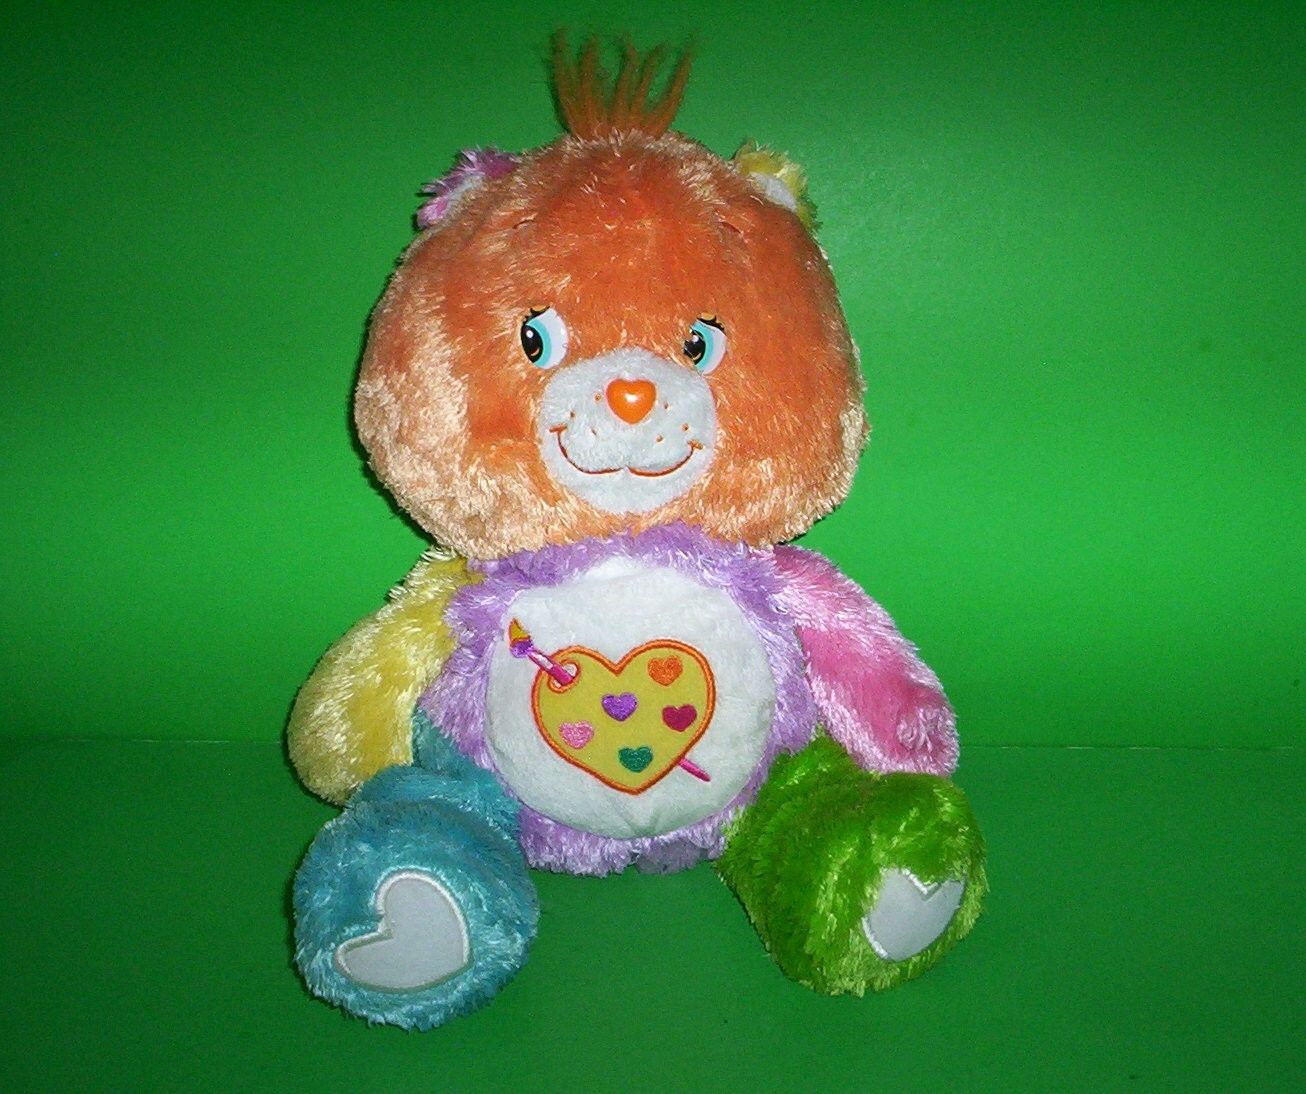 Care Bears Work of Heart Bear 2005 Super Soft Plush Floppy Stuffed Animal